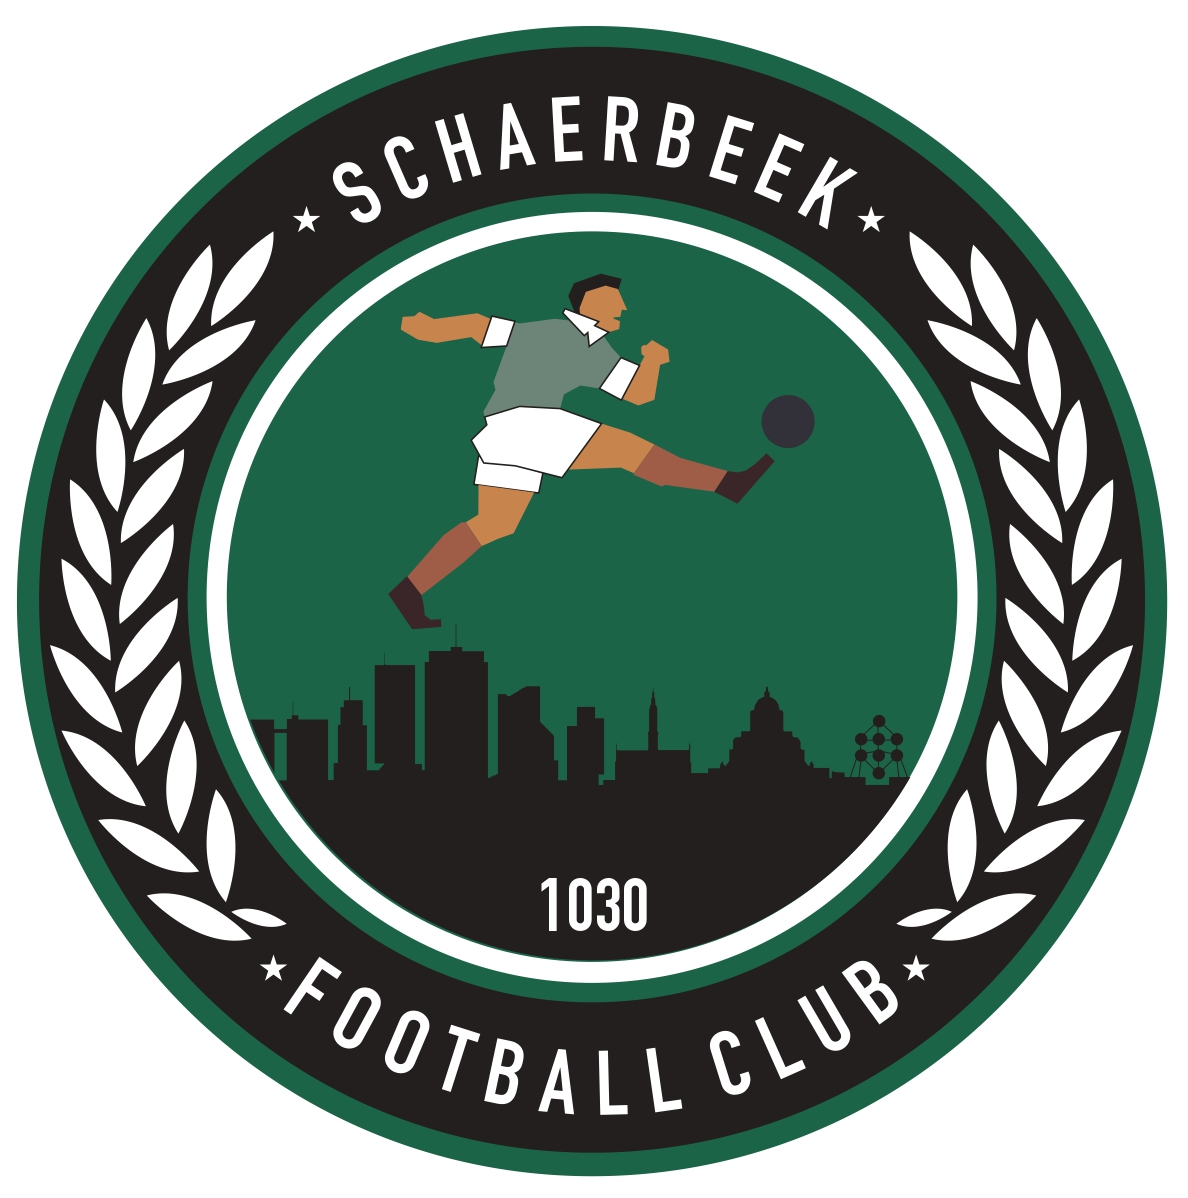 14 - Football Club Schaerbeek B